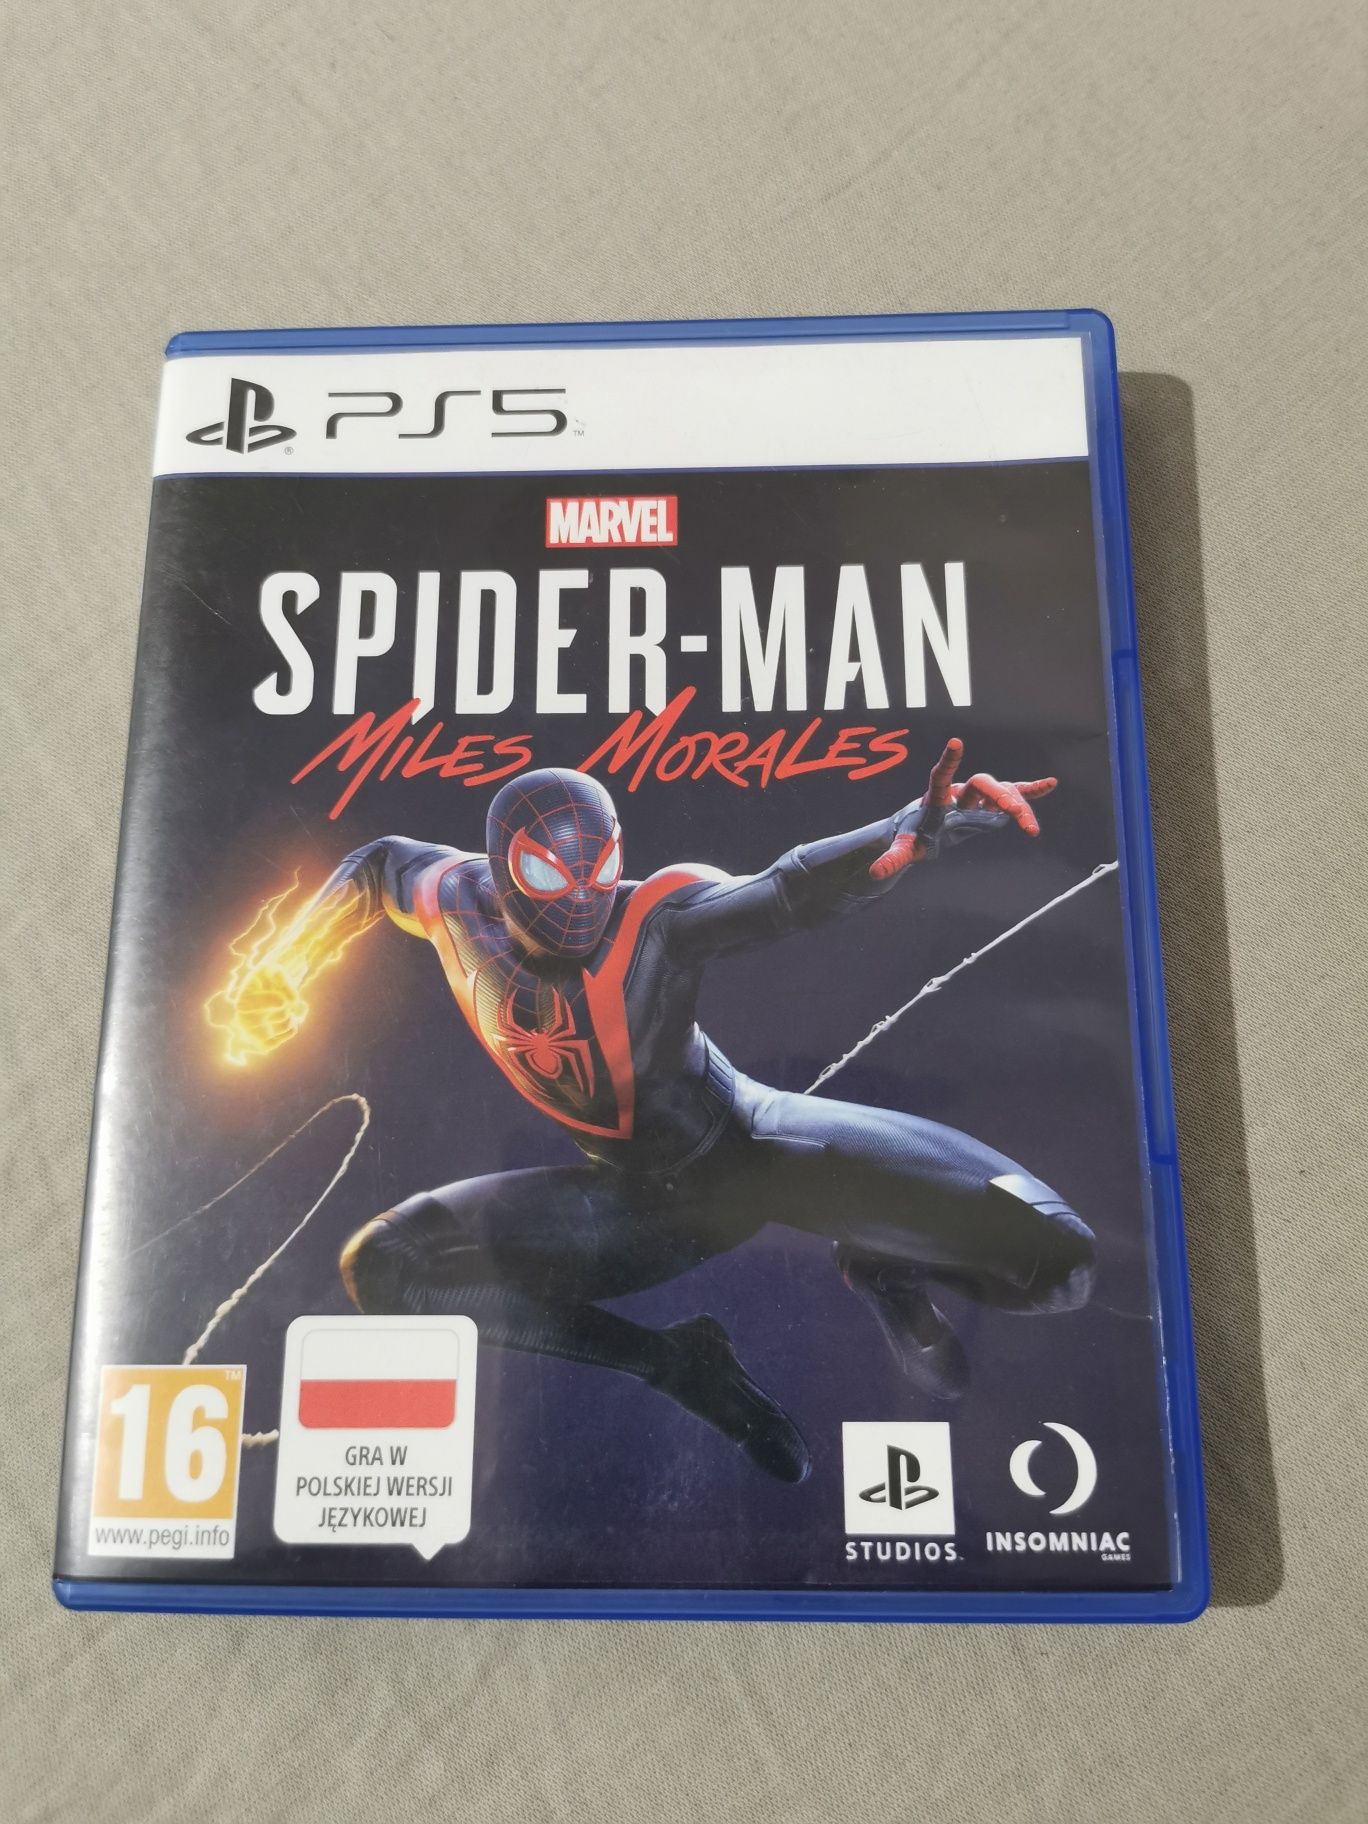 Spider-Man Miles Morales gra PS5